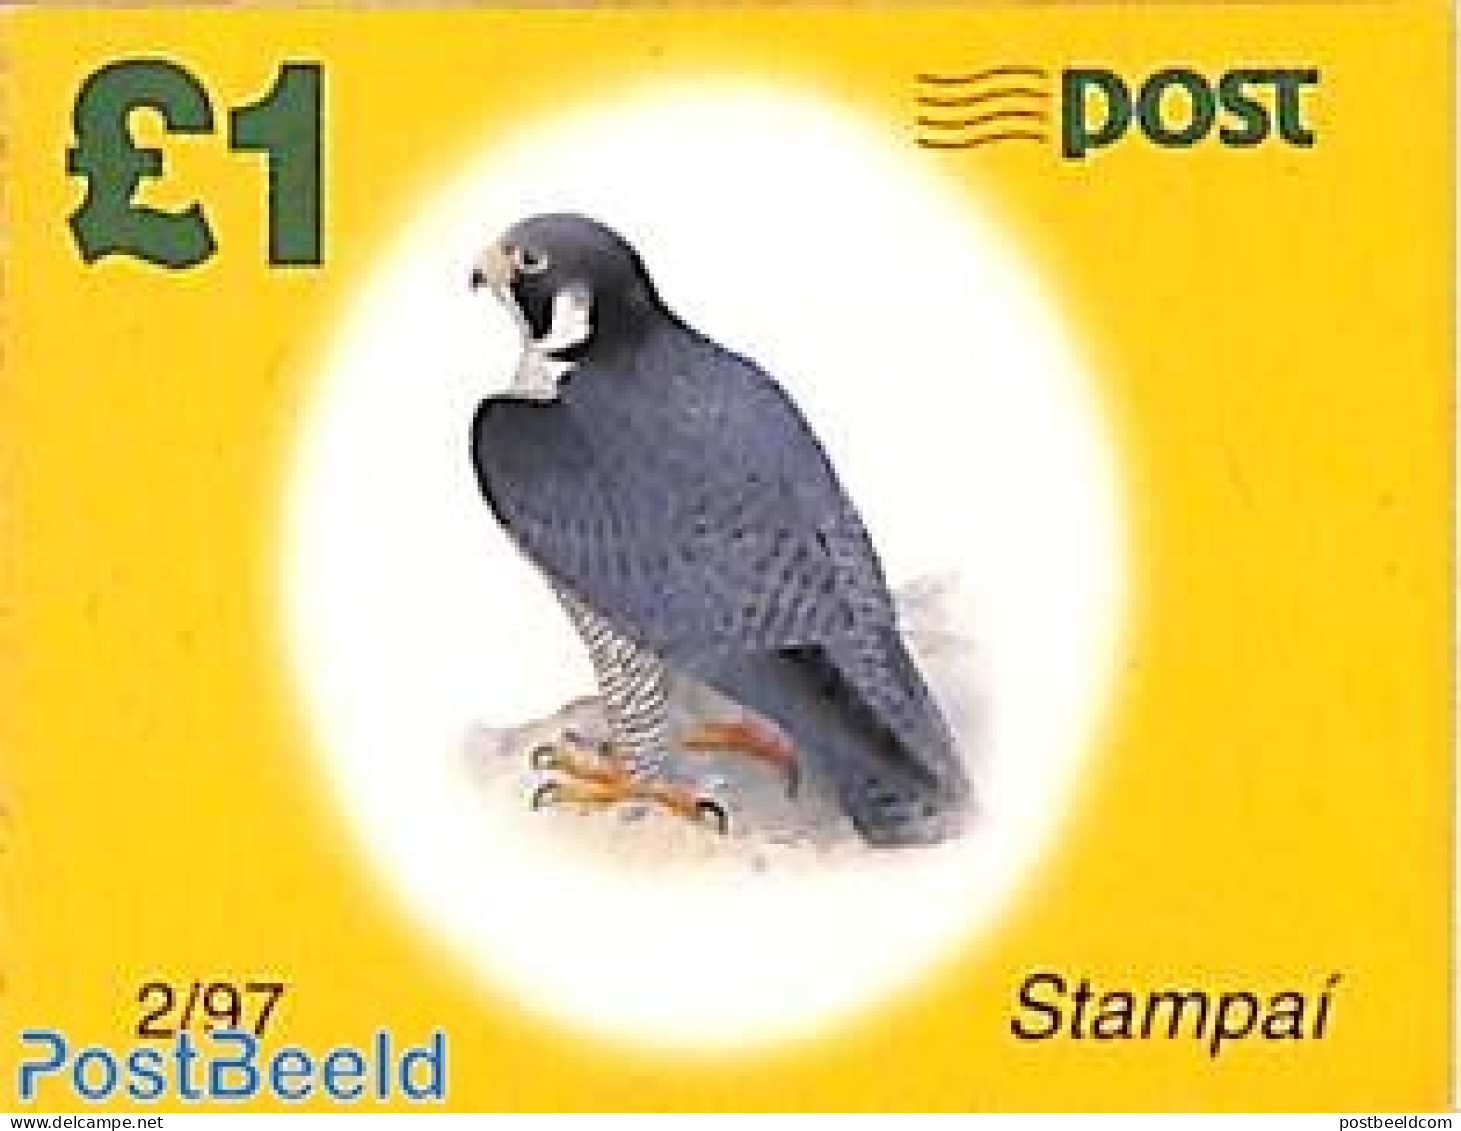 Ireland 1997 Birds Booklet, Mint NH, Nature - Birds - Birds Of Prey - Stamp Booklets - Unused Stamps